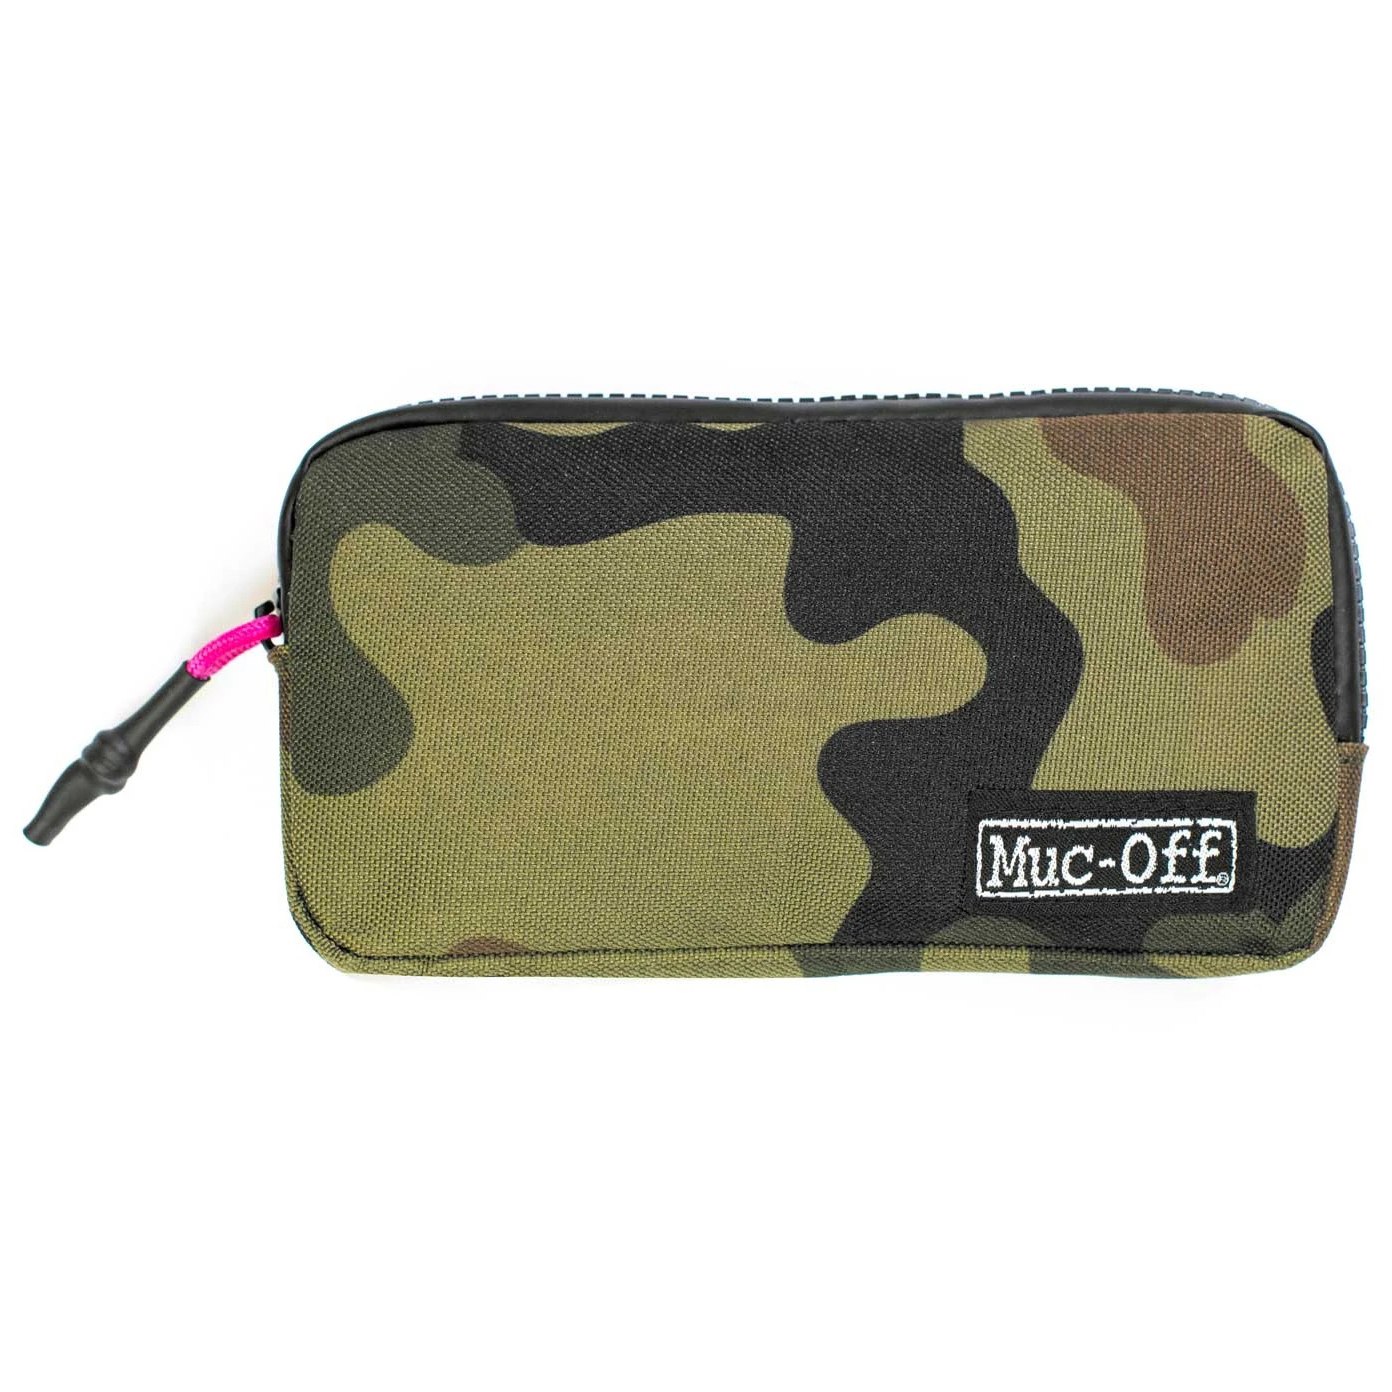 Productfoto van Muc-Off Essentials Case - Accessoires Tas - camo/black